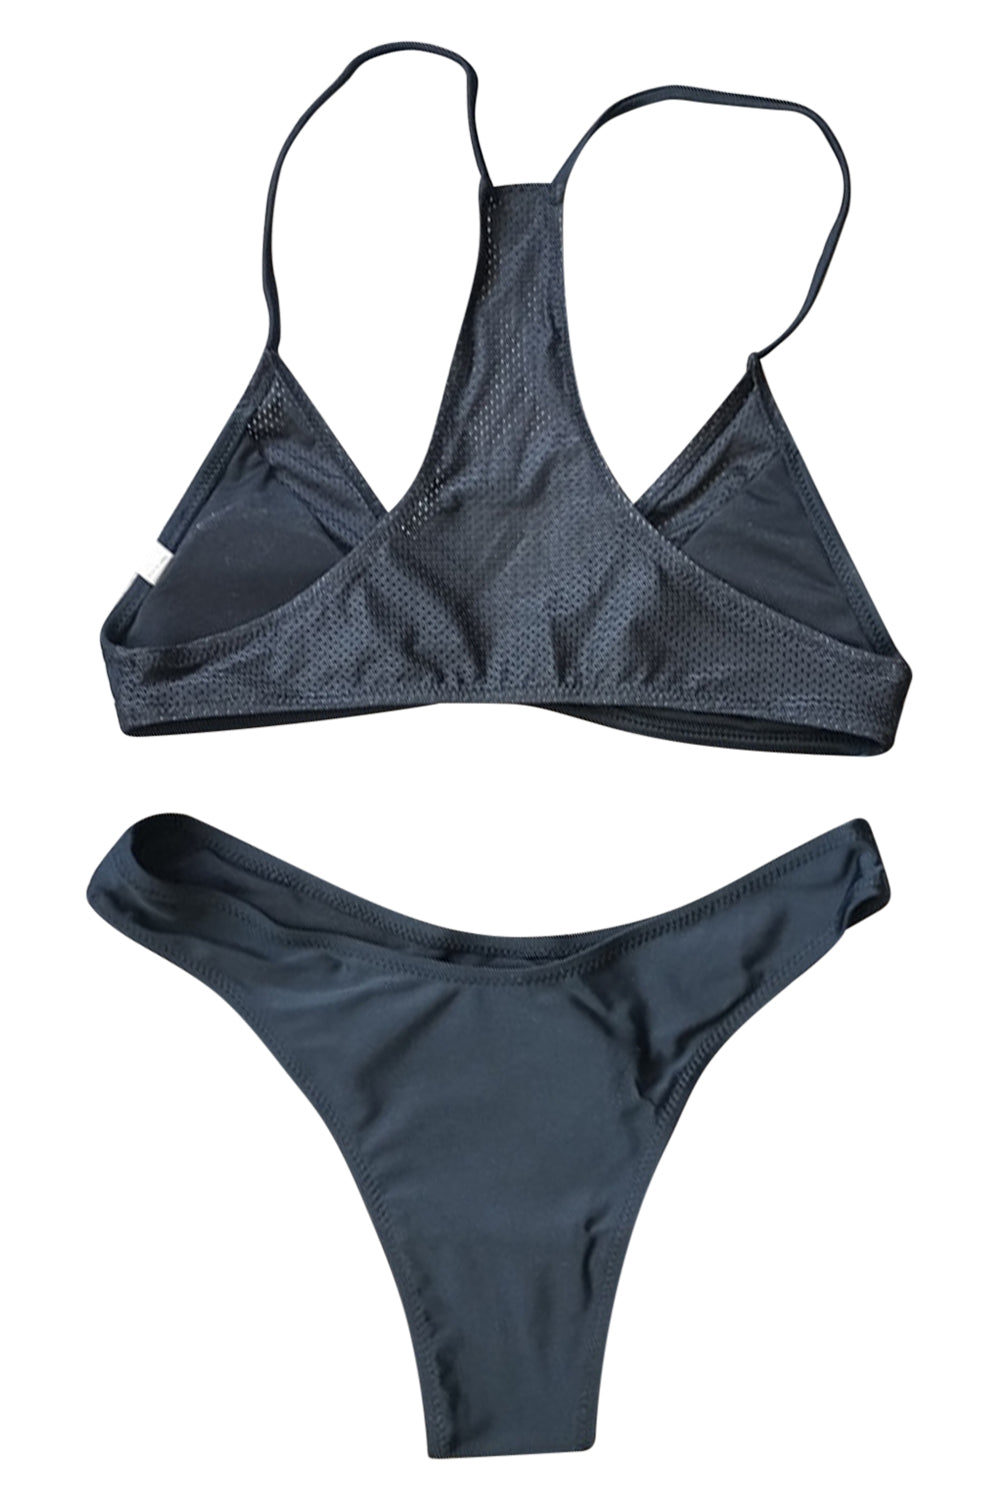 Iyasson Sexy Triangle Top With Mesh Splicing Bikini Sets